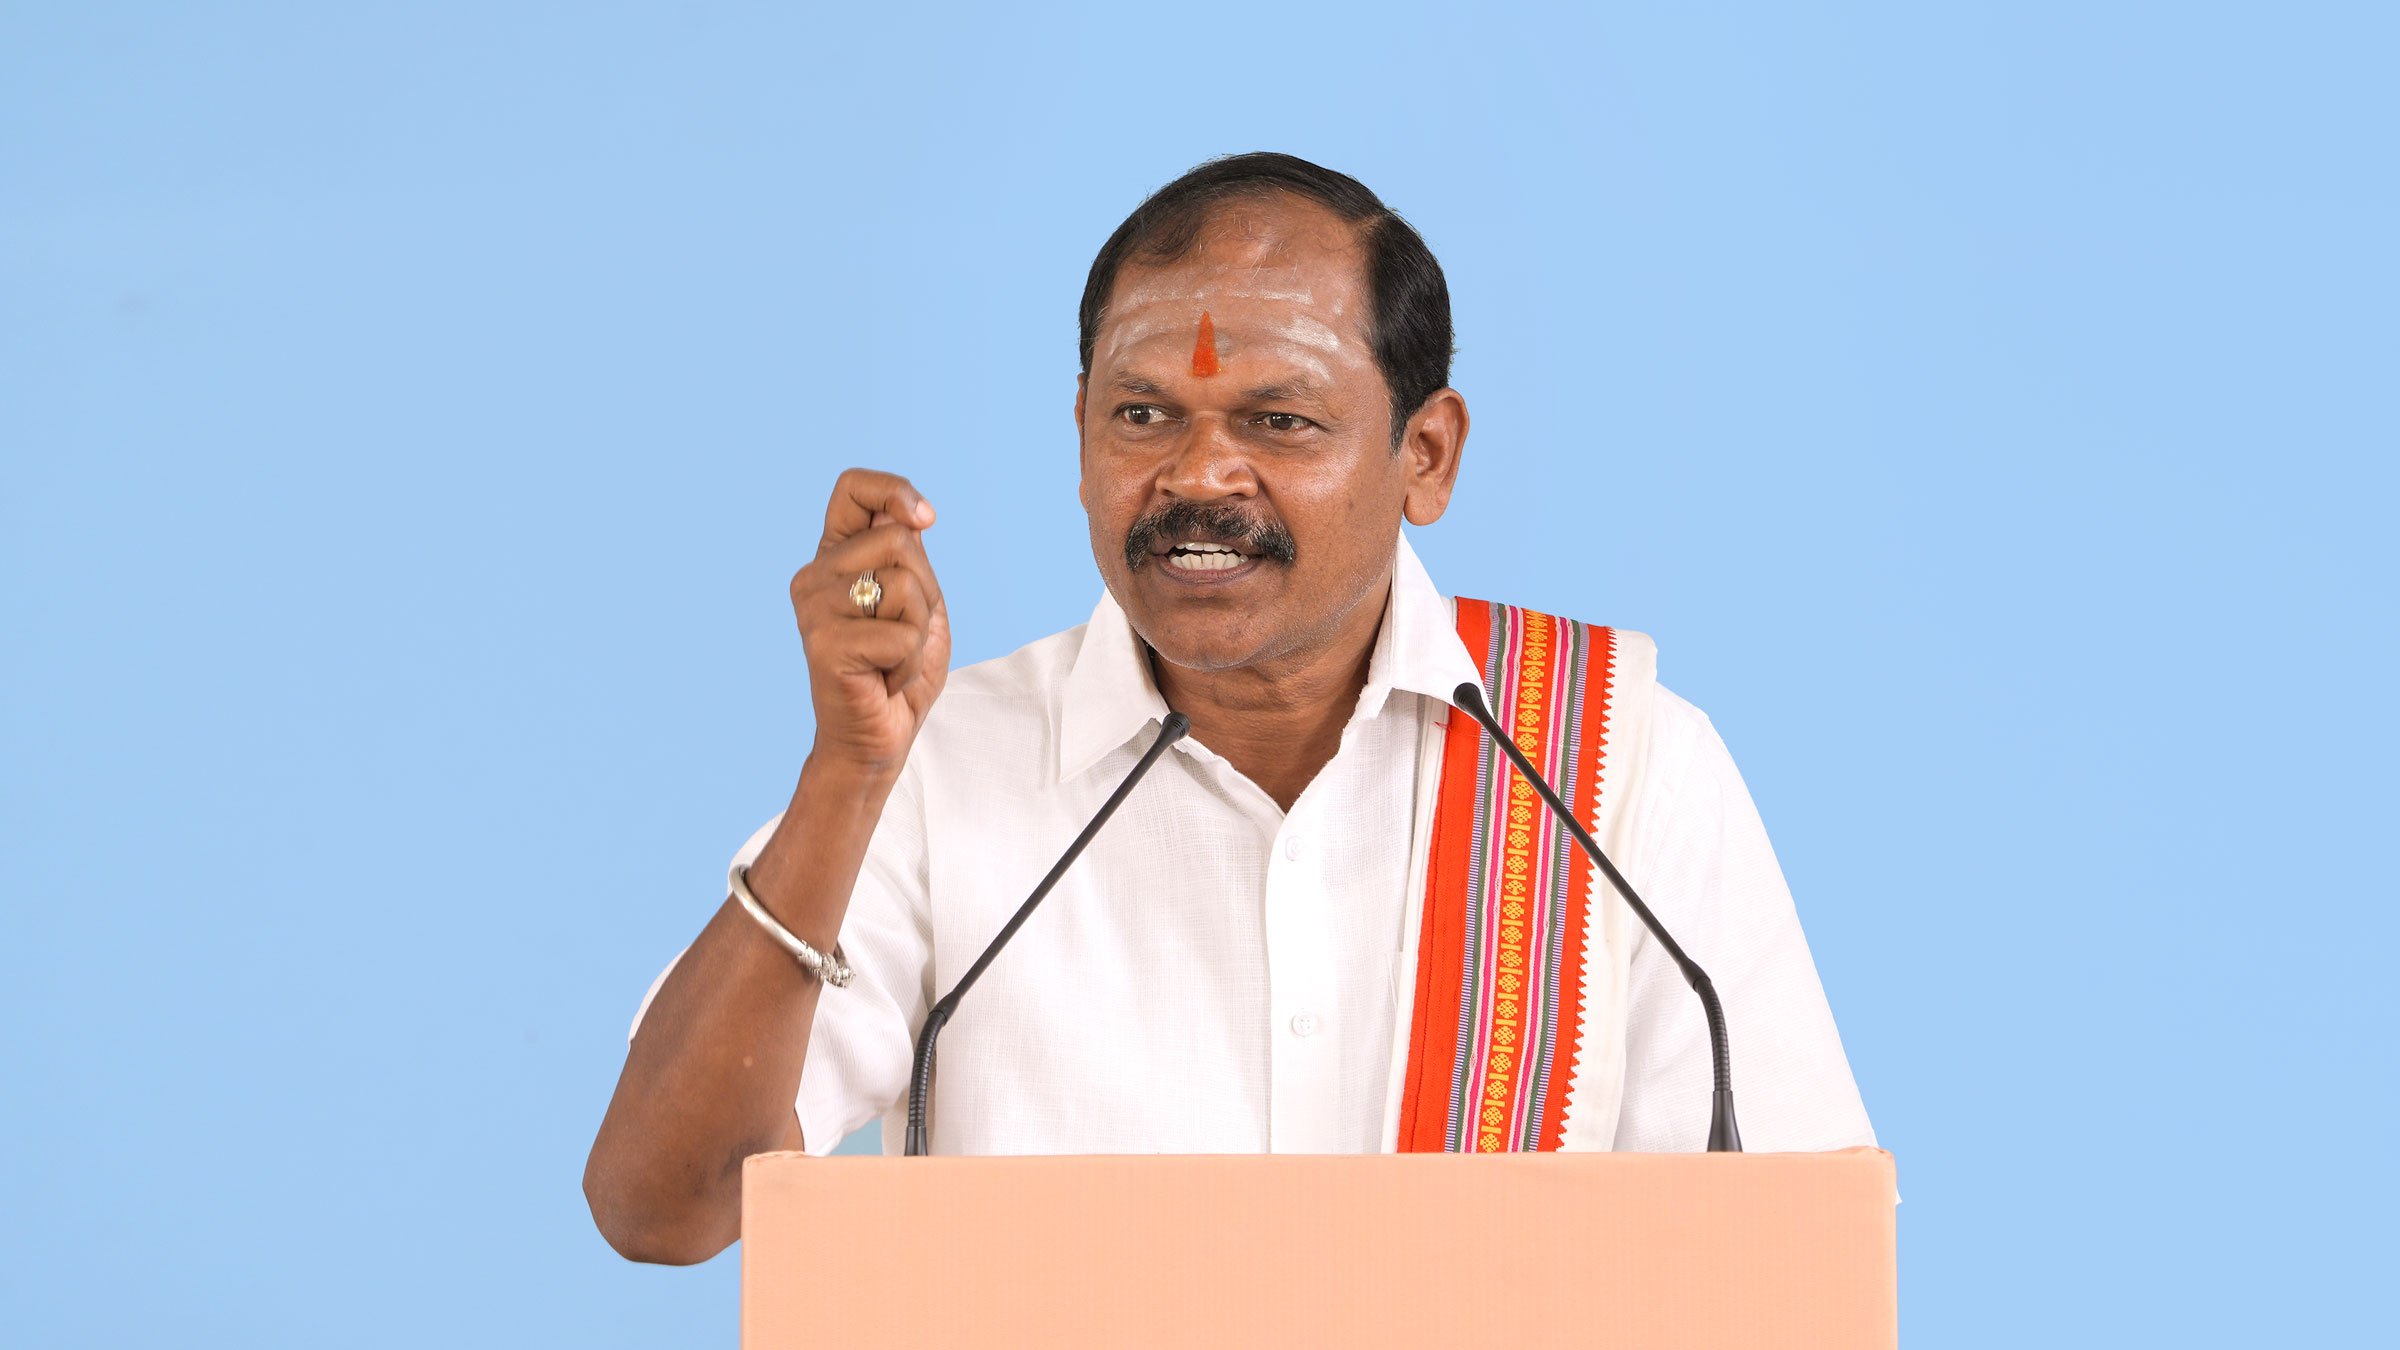 Mr Arjun Sampath (Founder President, Indu Makkal Katchi, Tamil Nadu) elucidating the efforts made to oppose anti-Hindu forces in Tamil Nadu